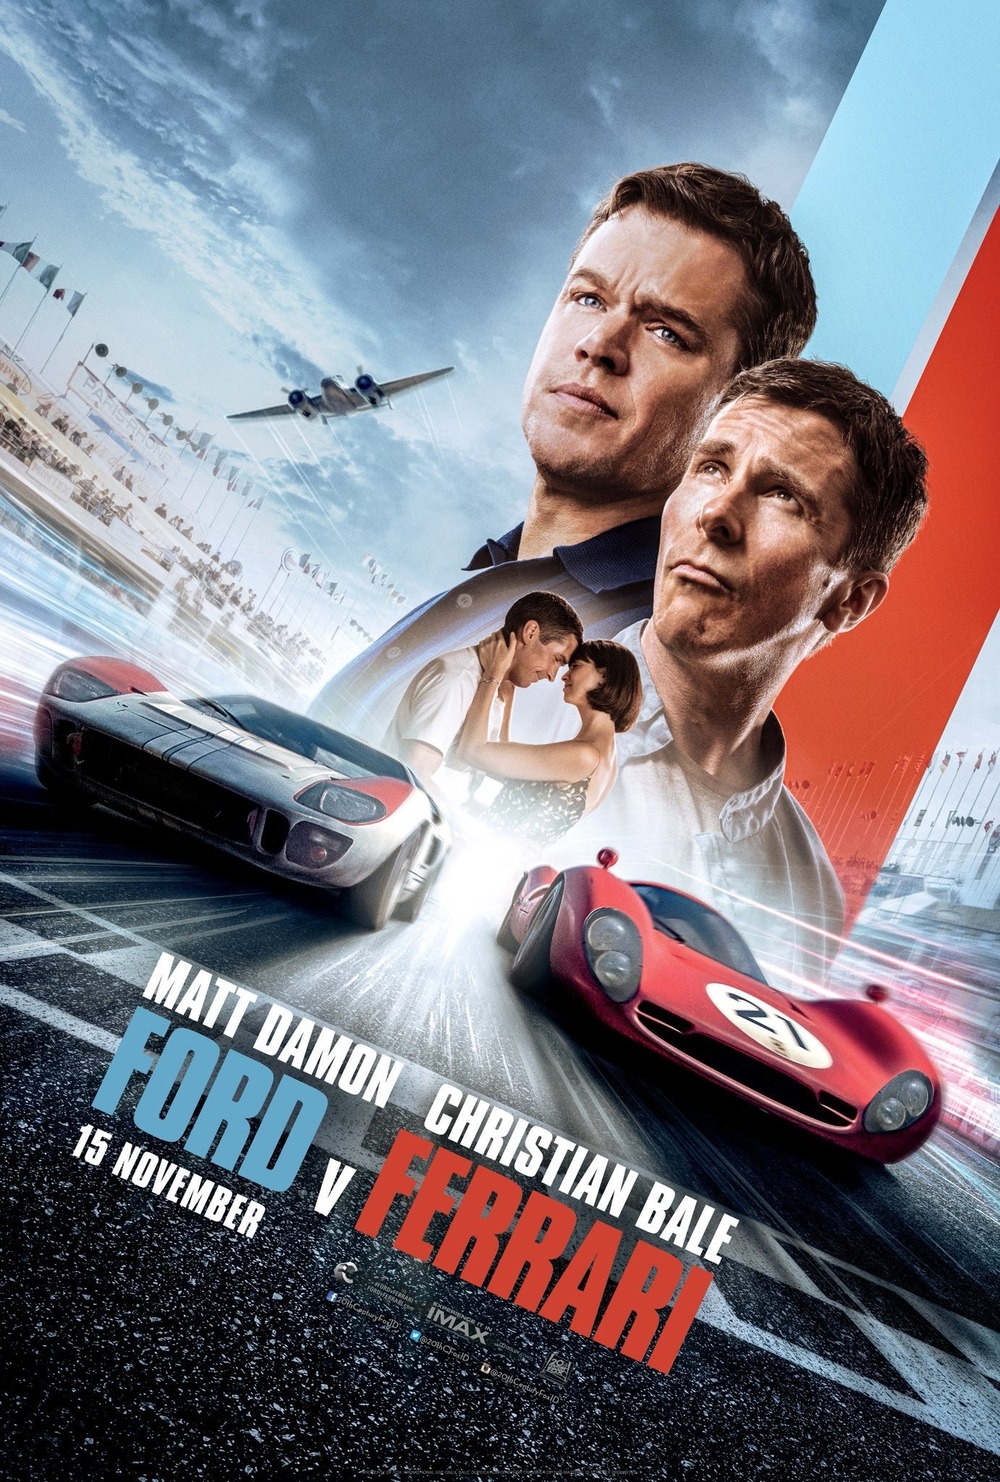 Ford v Ferrari DVD Release Date | Redbox, Netflix, iTunes, Amazon